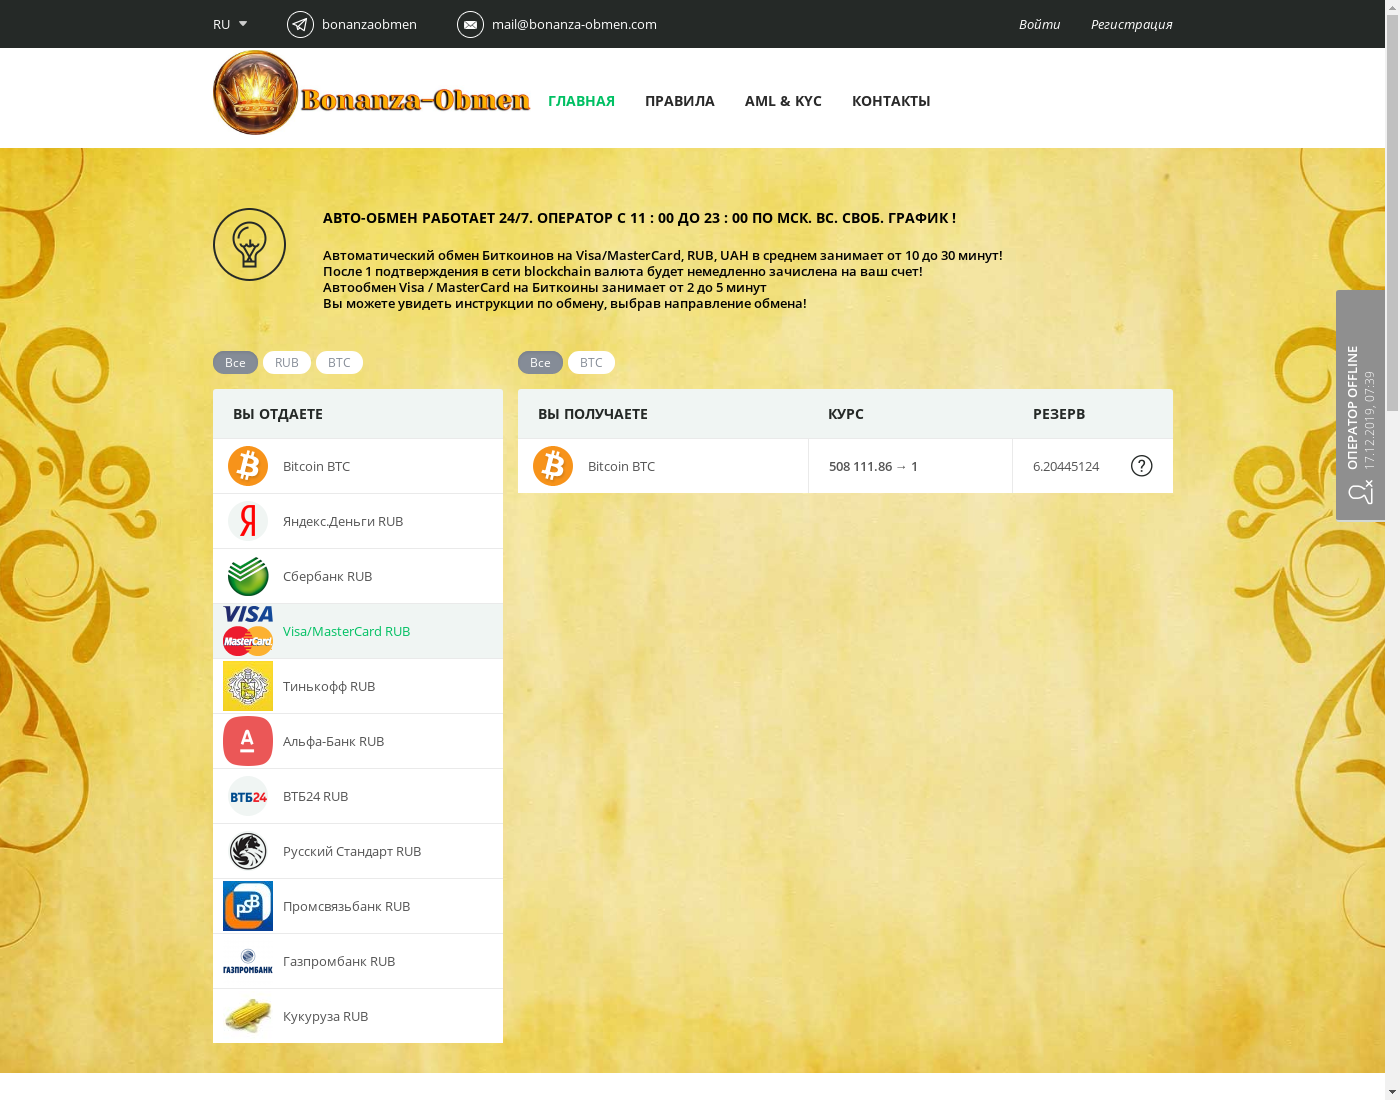 bonanza-obmen user interface: the home page in English